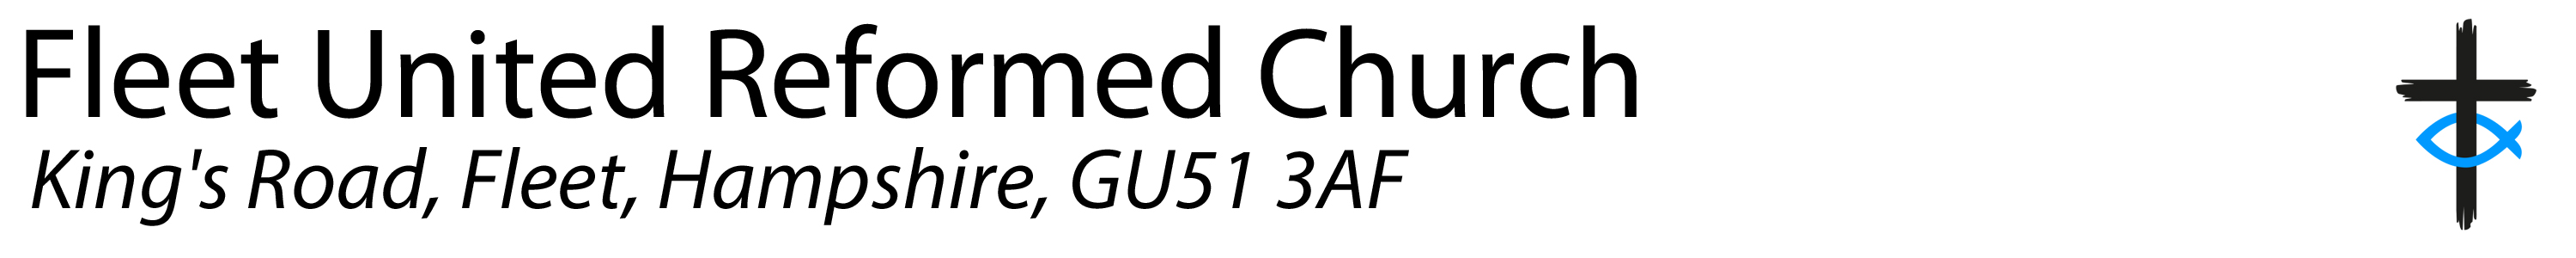 Fleet United Reformed Church